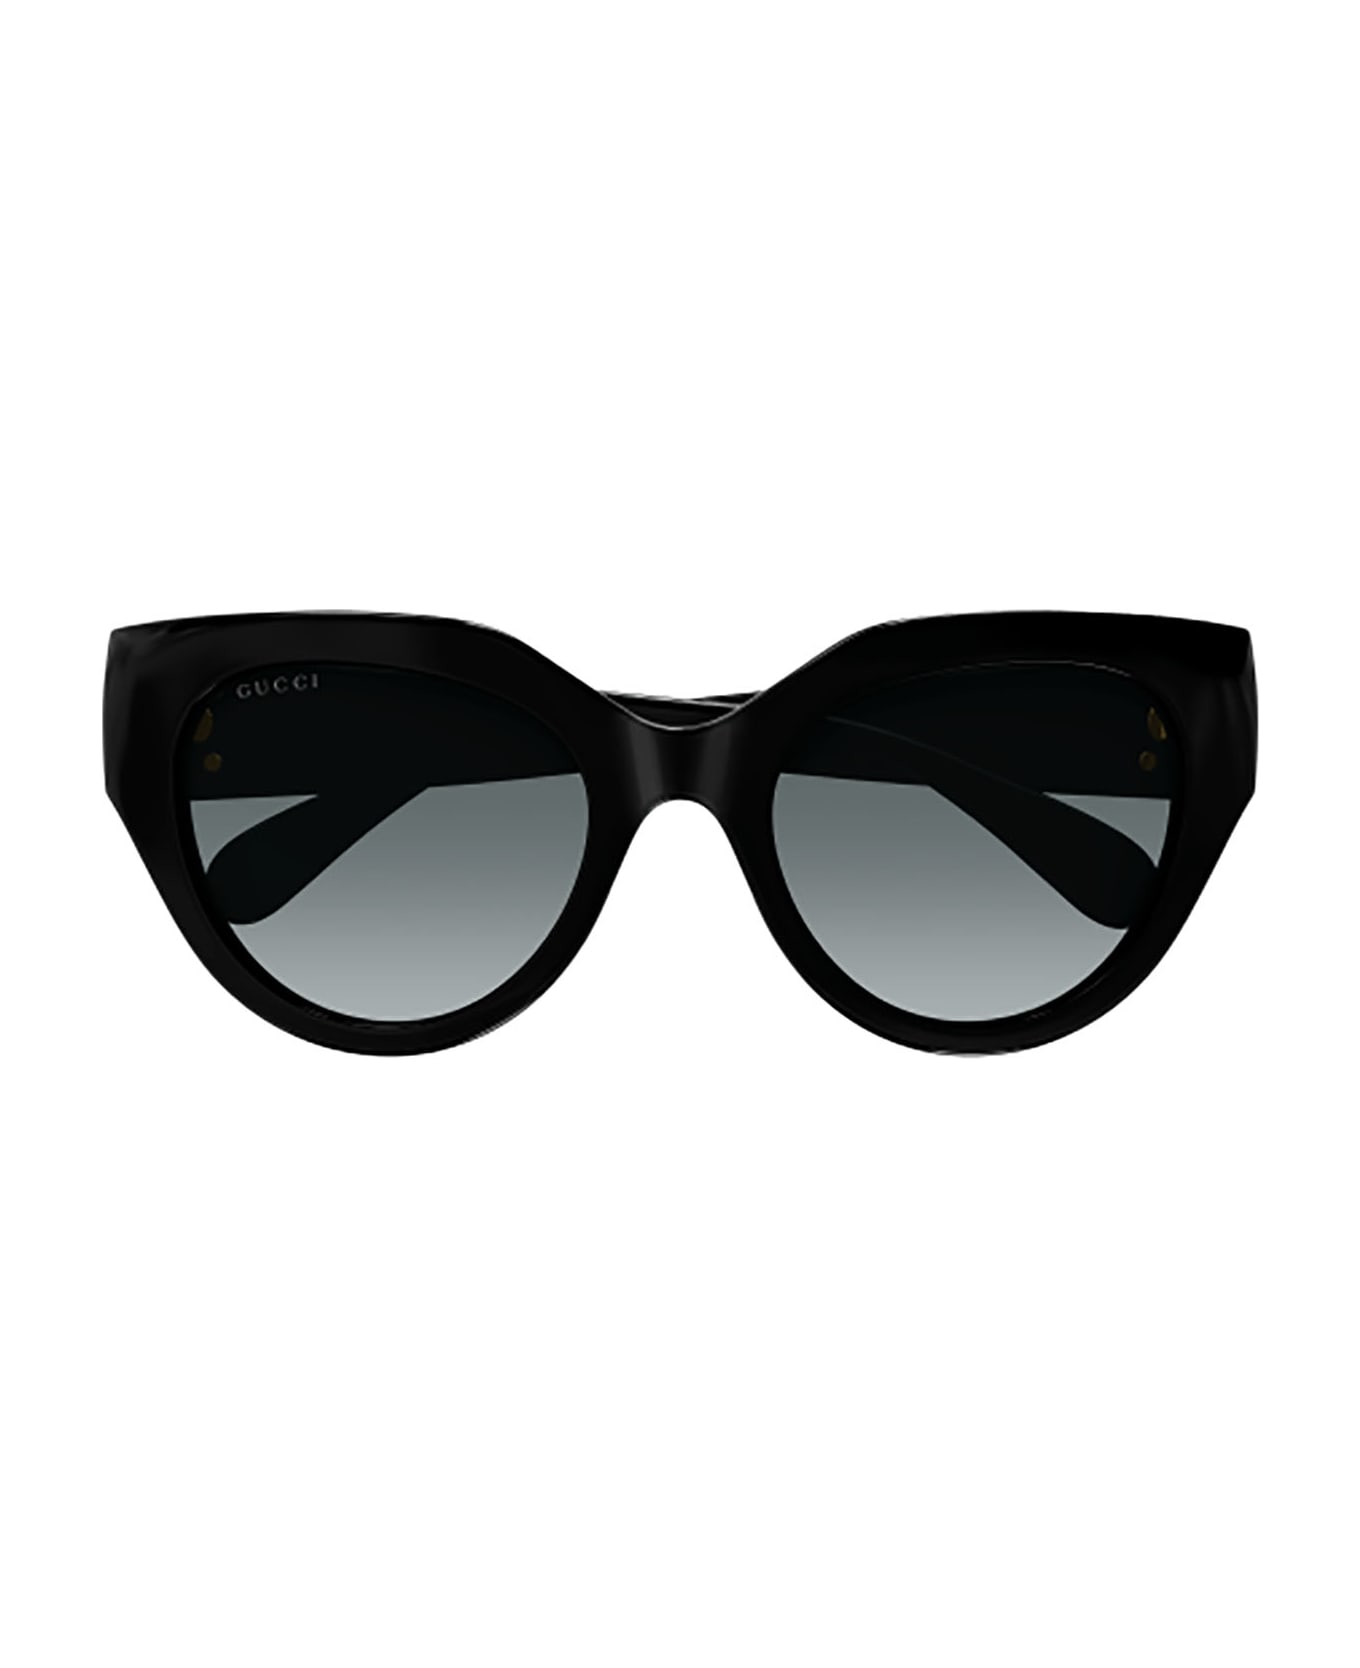 Gucci Eyewear Gg1408s Sunglasses - 001 black black grey